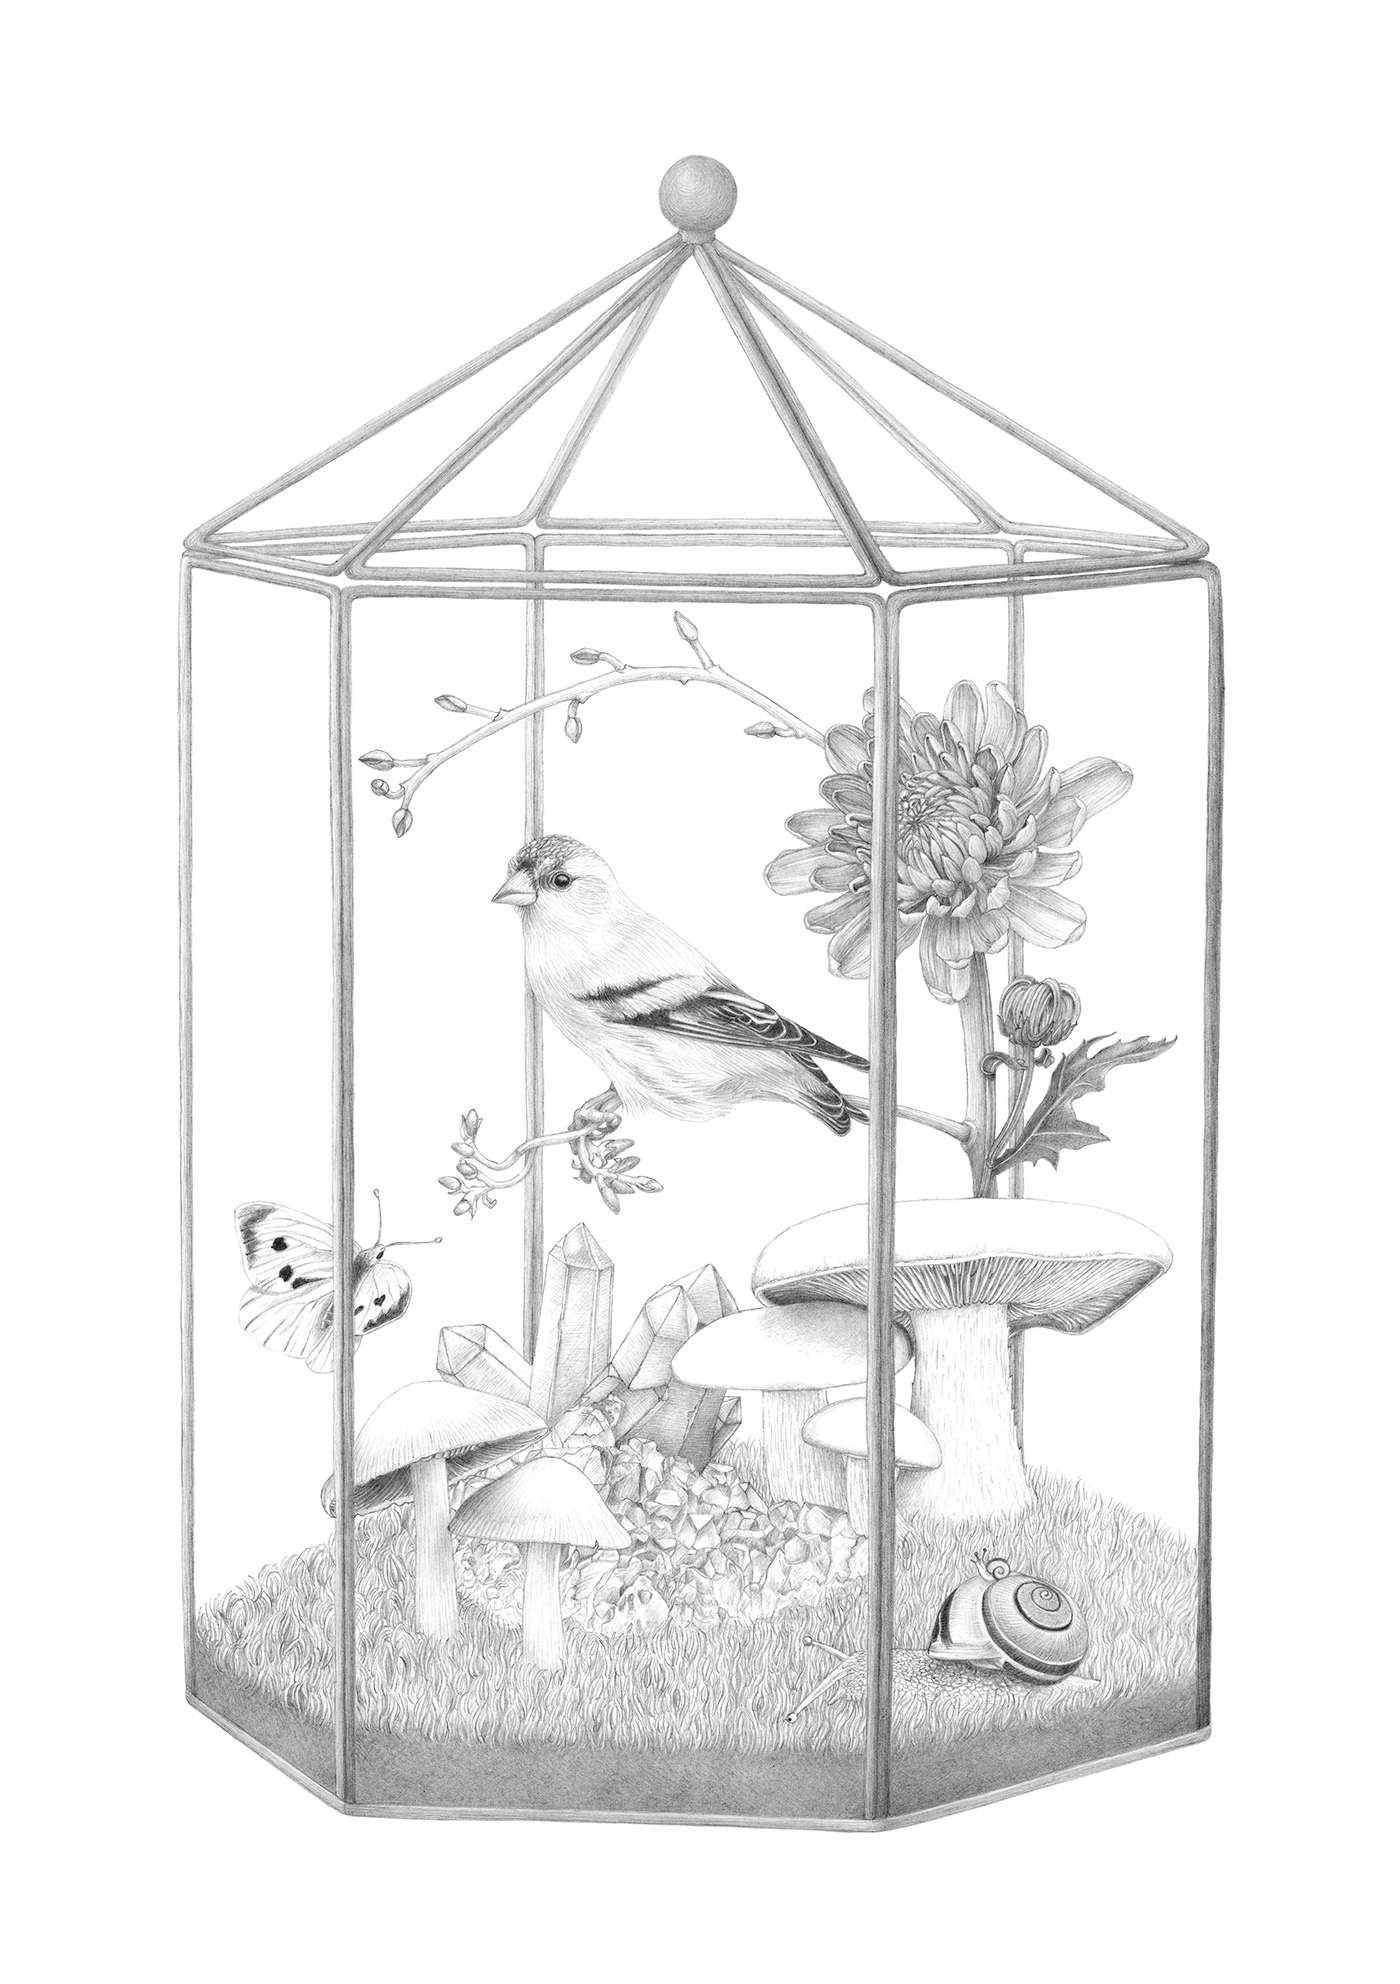 Adobe Photoshop Illustrator Nature terrarium animals plants mushroom cristal microcosm Flowers